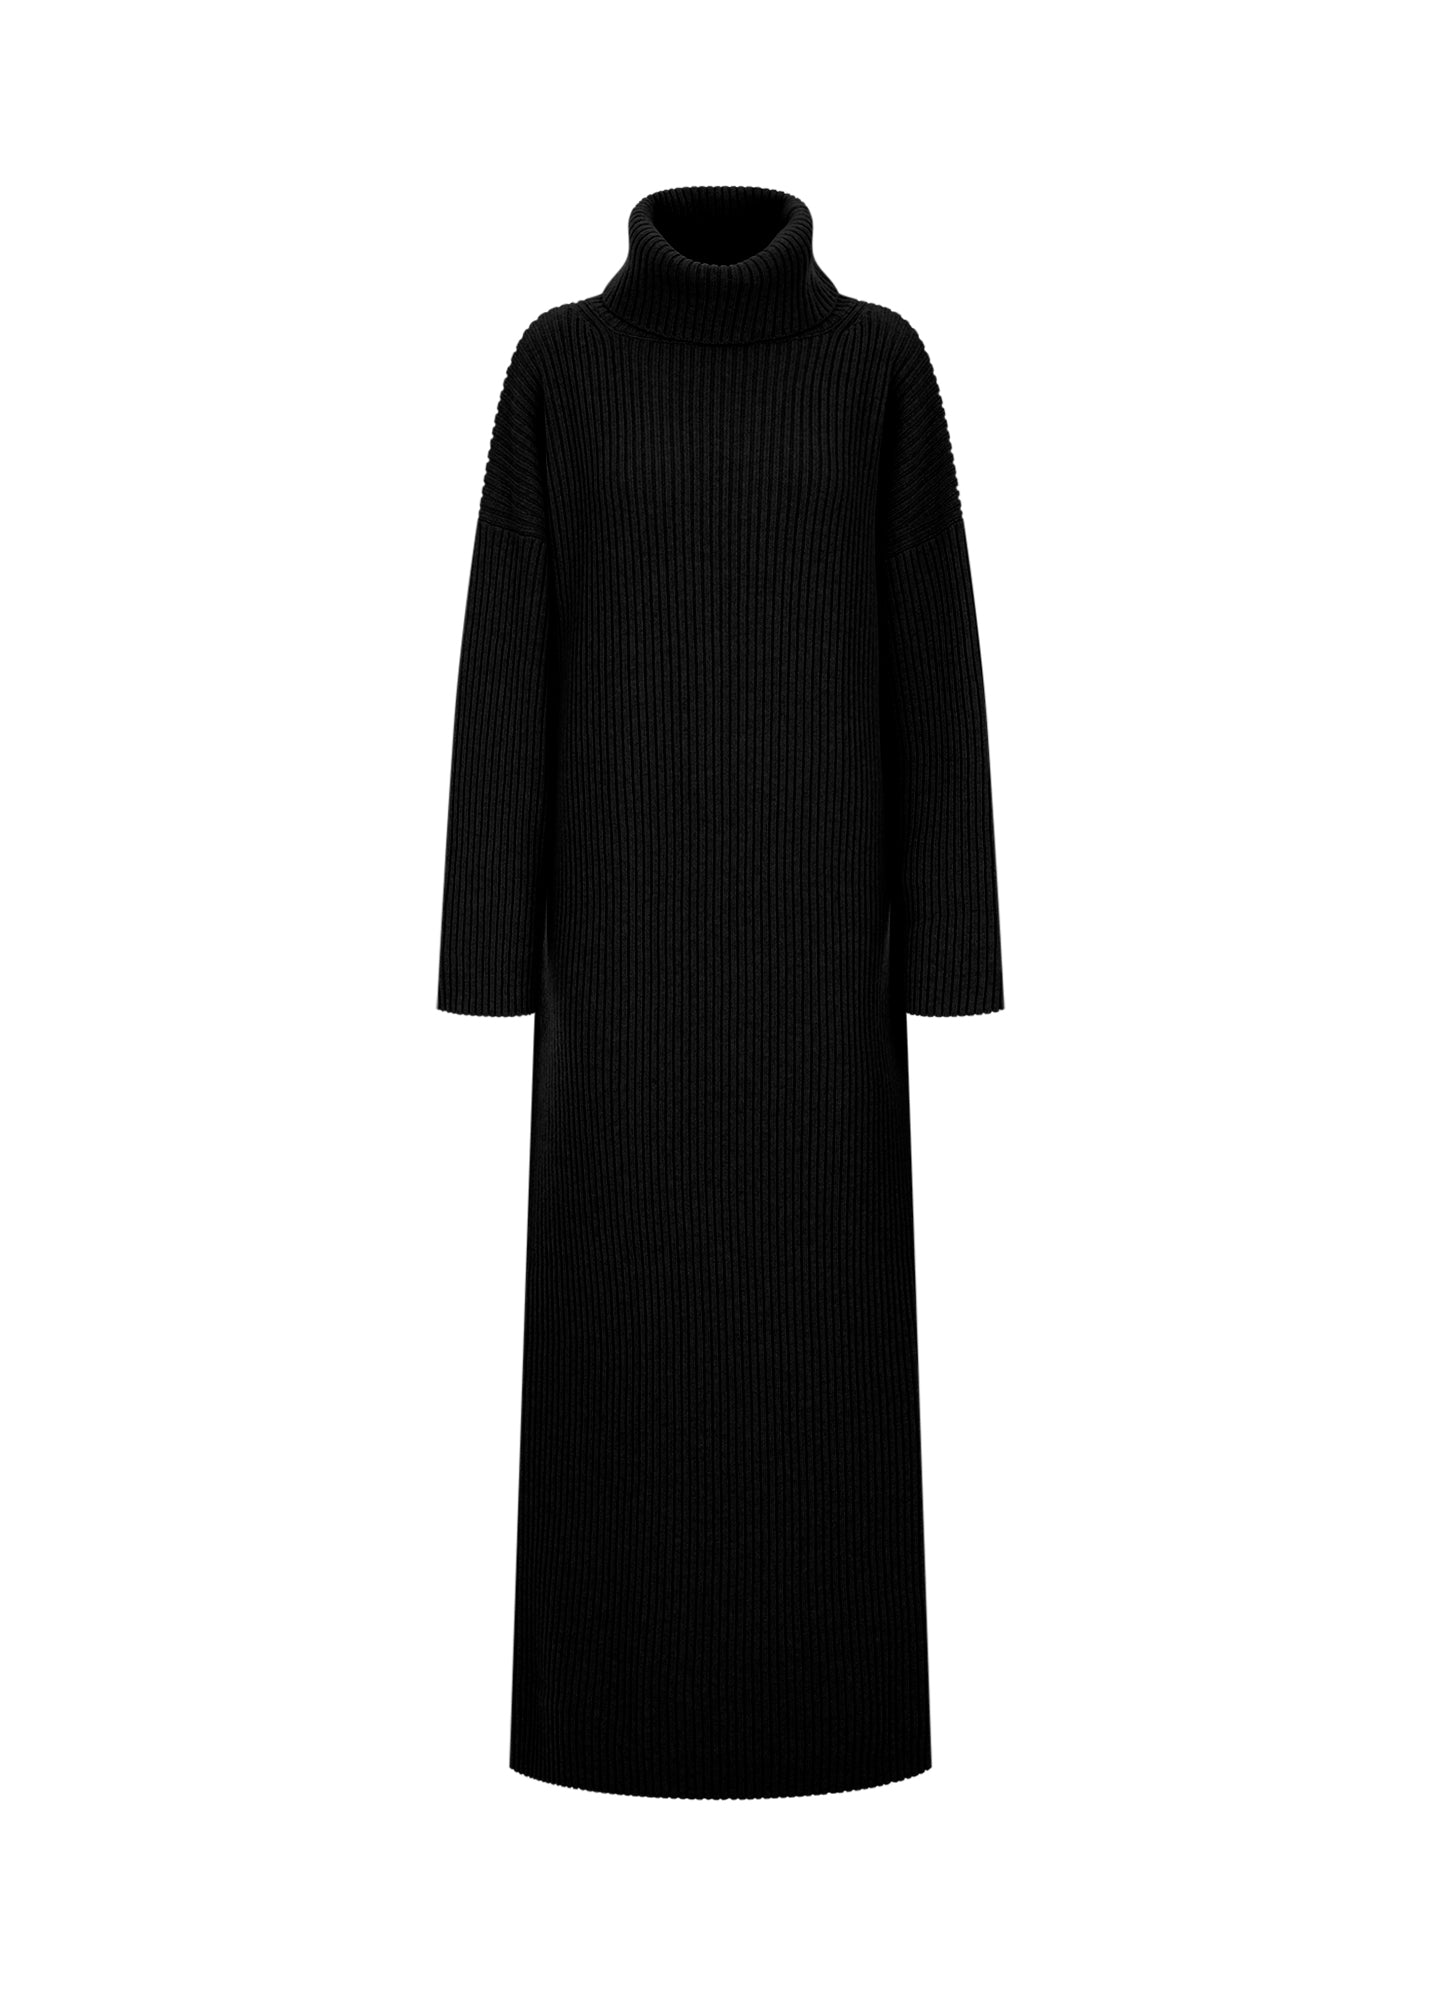 Black long cashmere wool roll neck dress